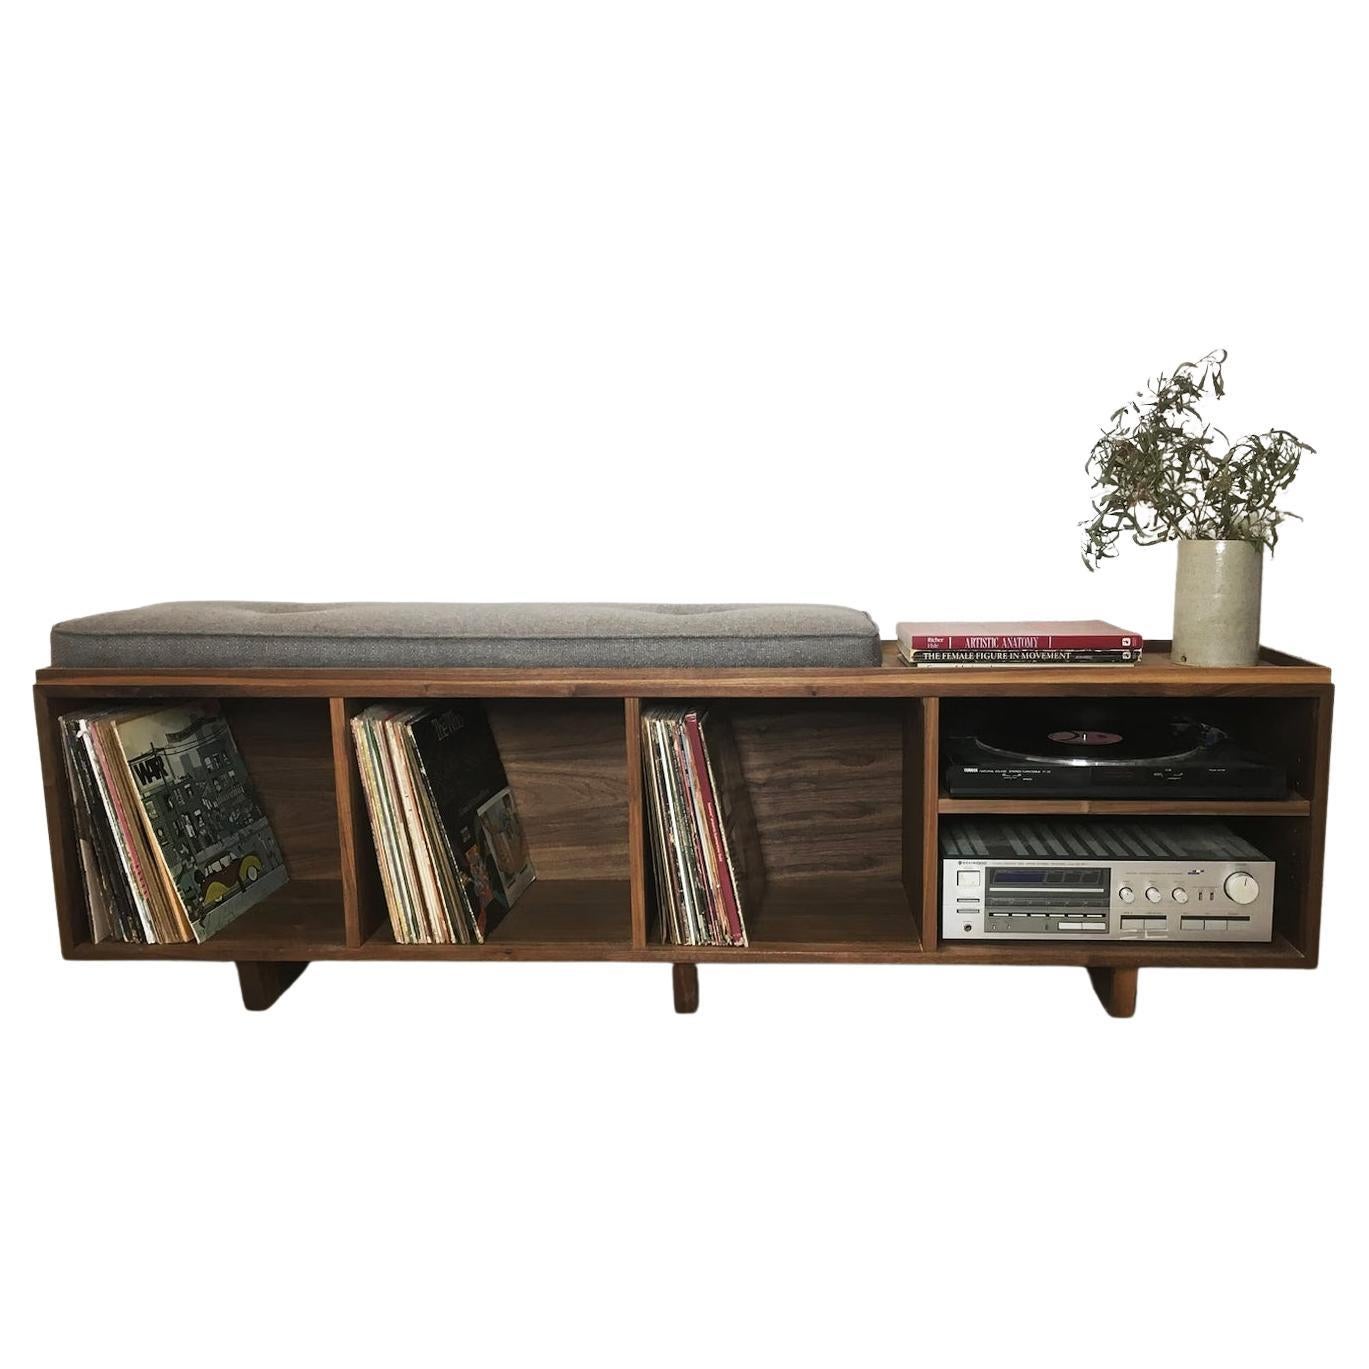 Pete Deeble Hifi Vinyl Lp Storage Bench Stereo Cabinet Mid-Century Modern Walnut